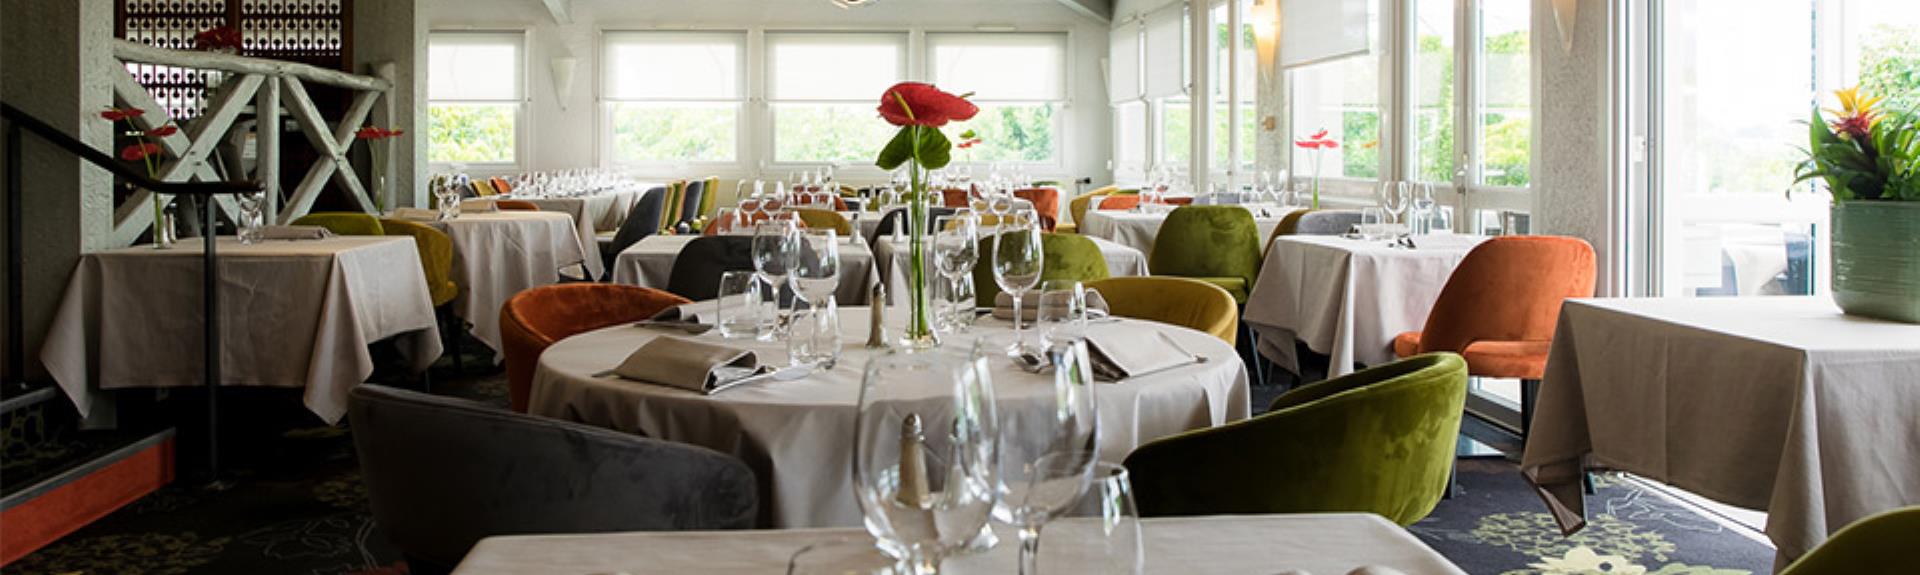 Restaurant-Le-Rabelais,-Fontenay-Le-Comte,-960x520